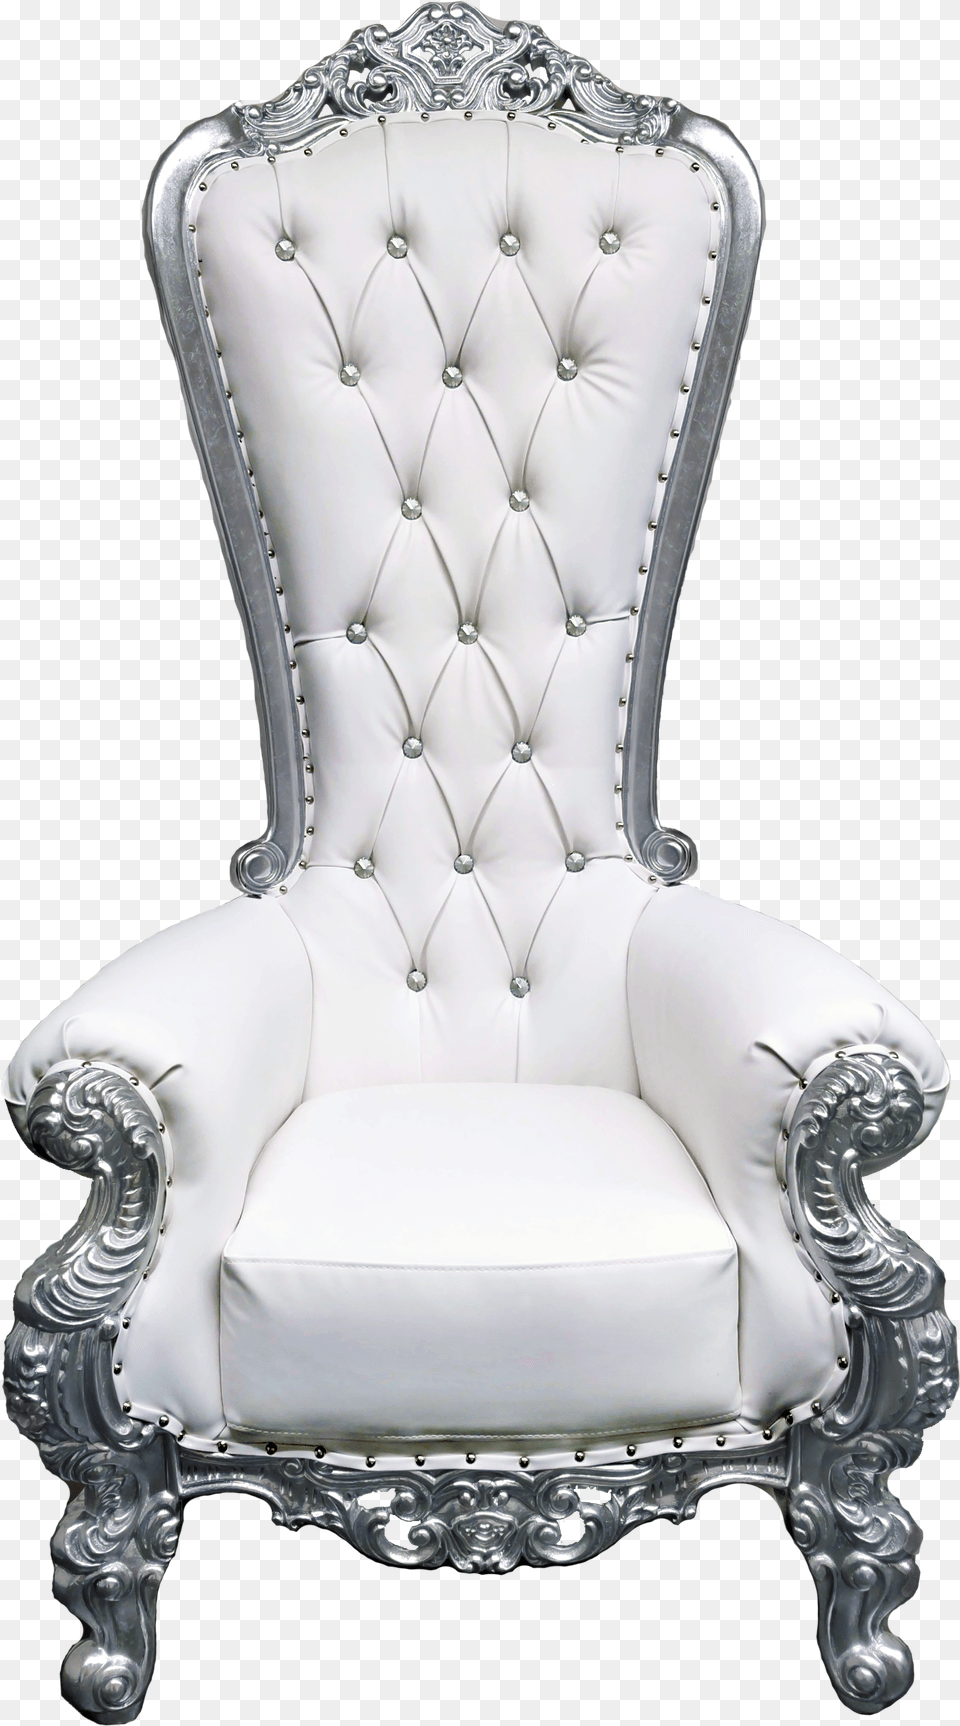 Queen Throne Chair Silverwhite Throne Chair For Sale, Furniture, Armchair Free Png